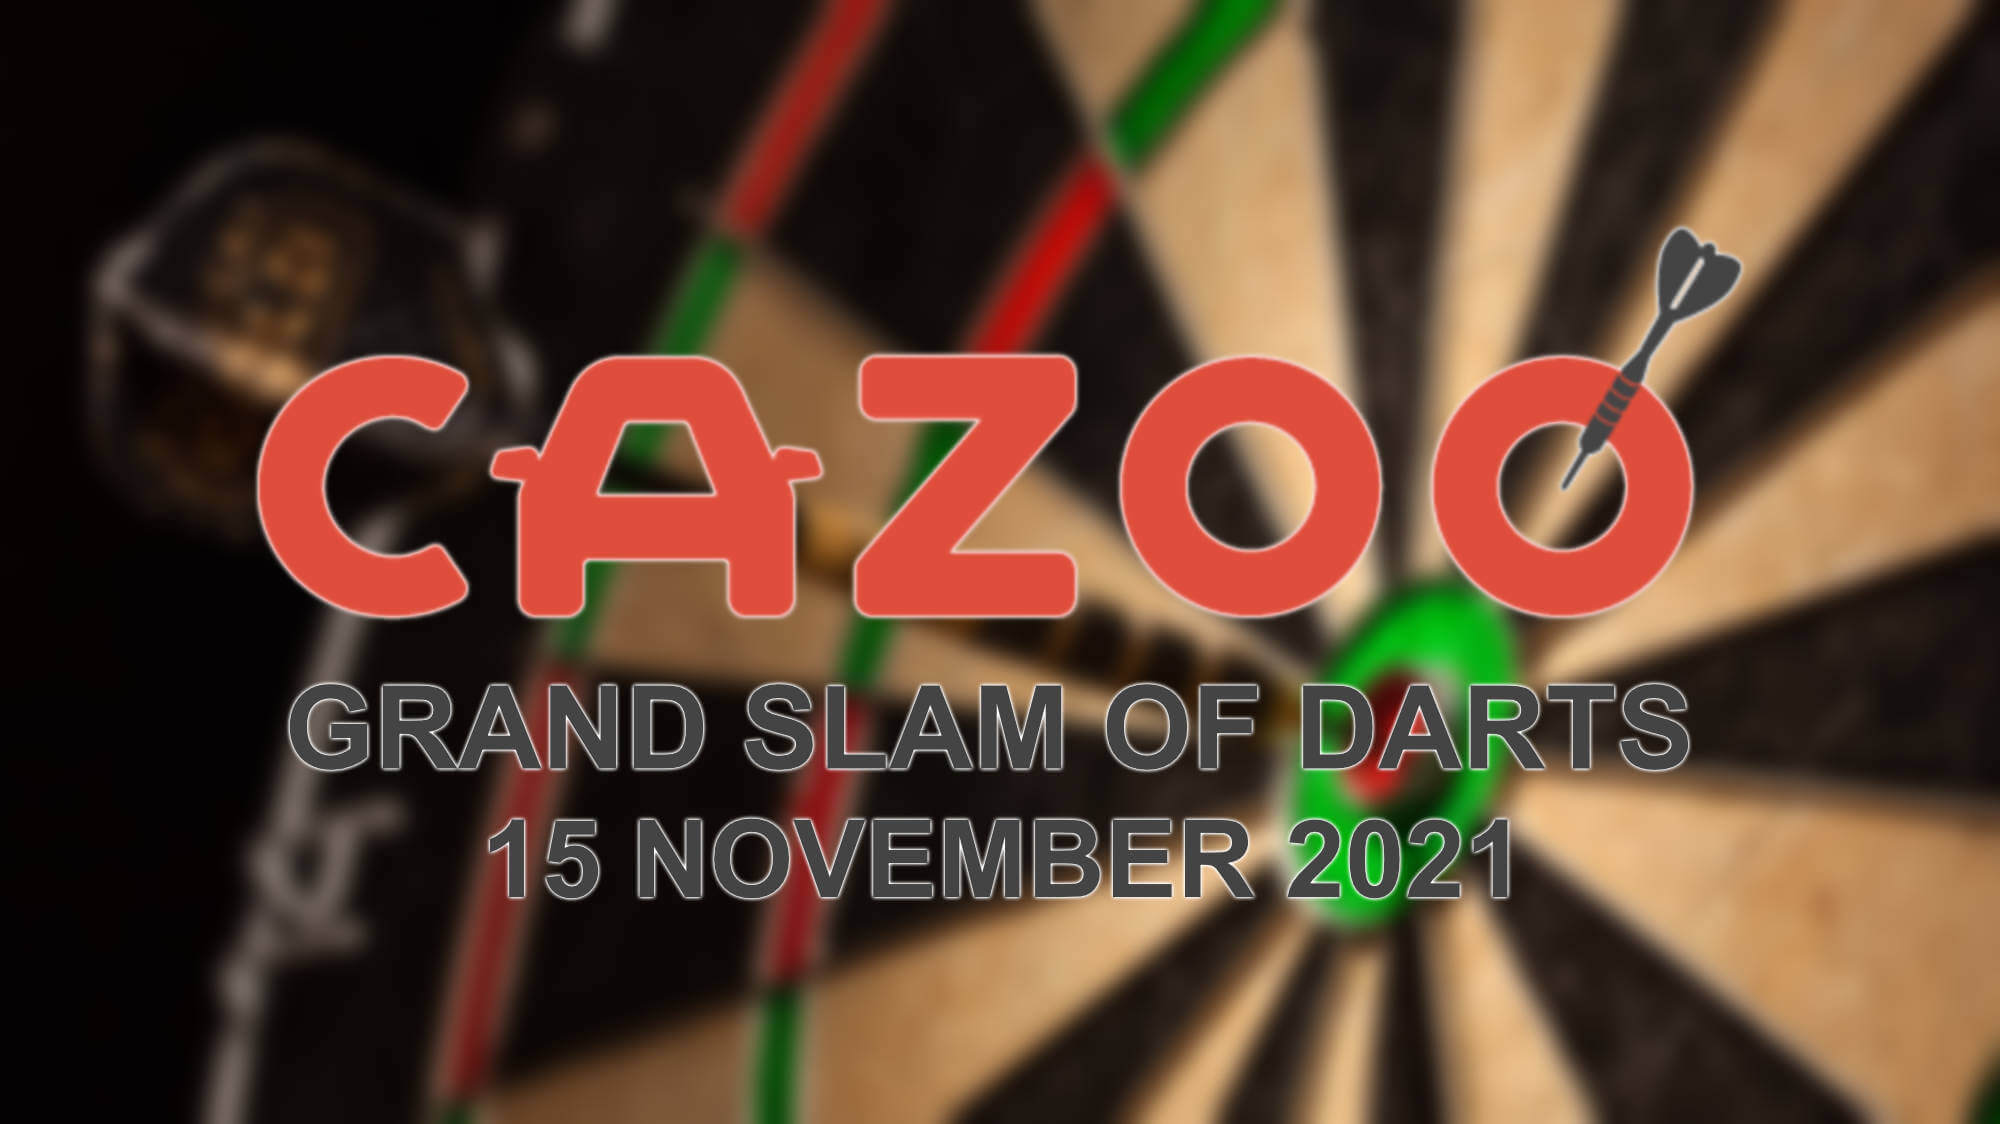 Grand Slam of Darts 15-11-2021